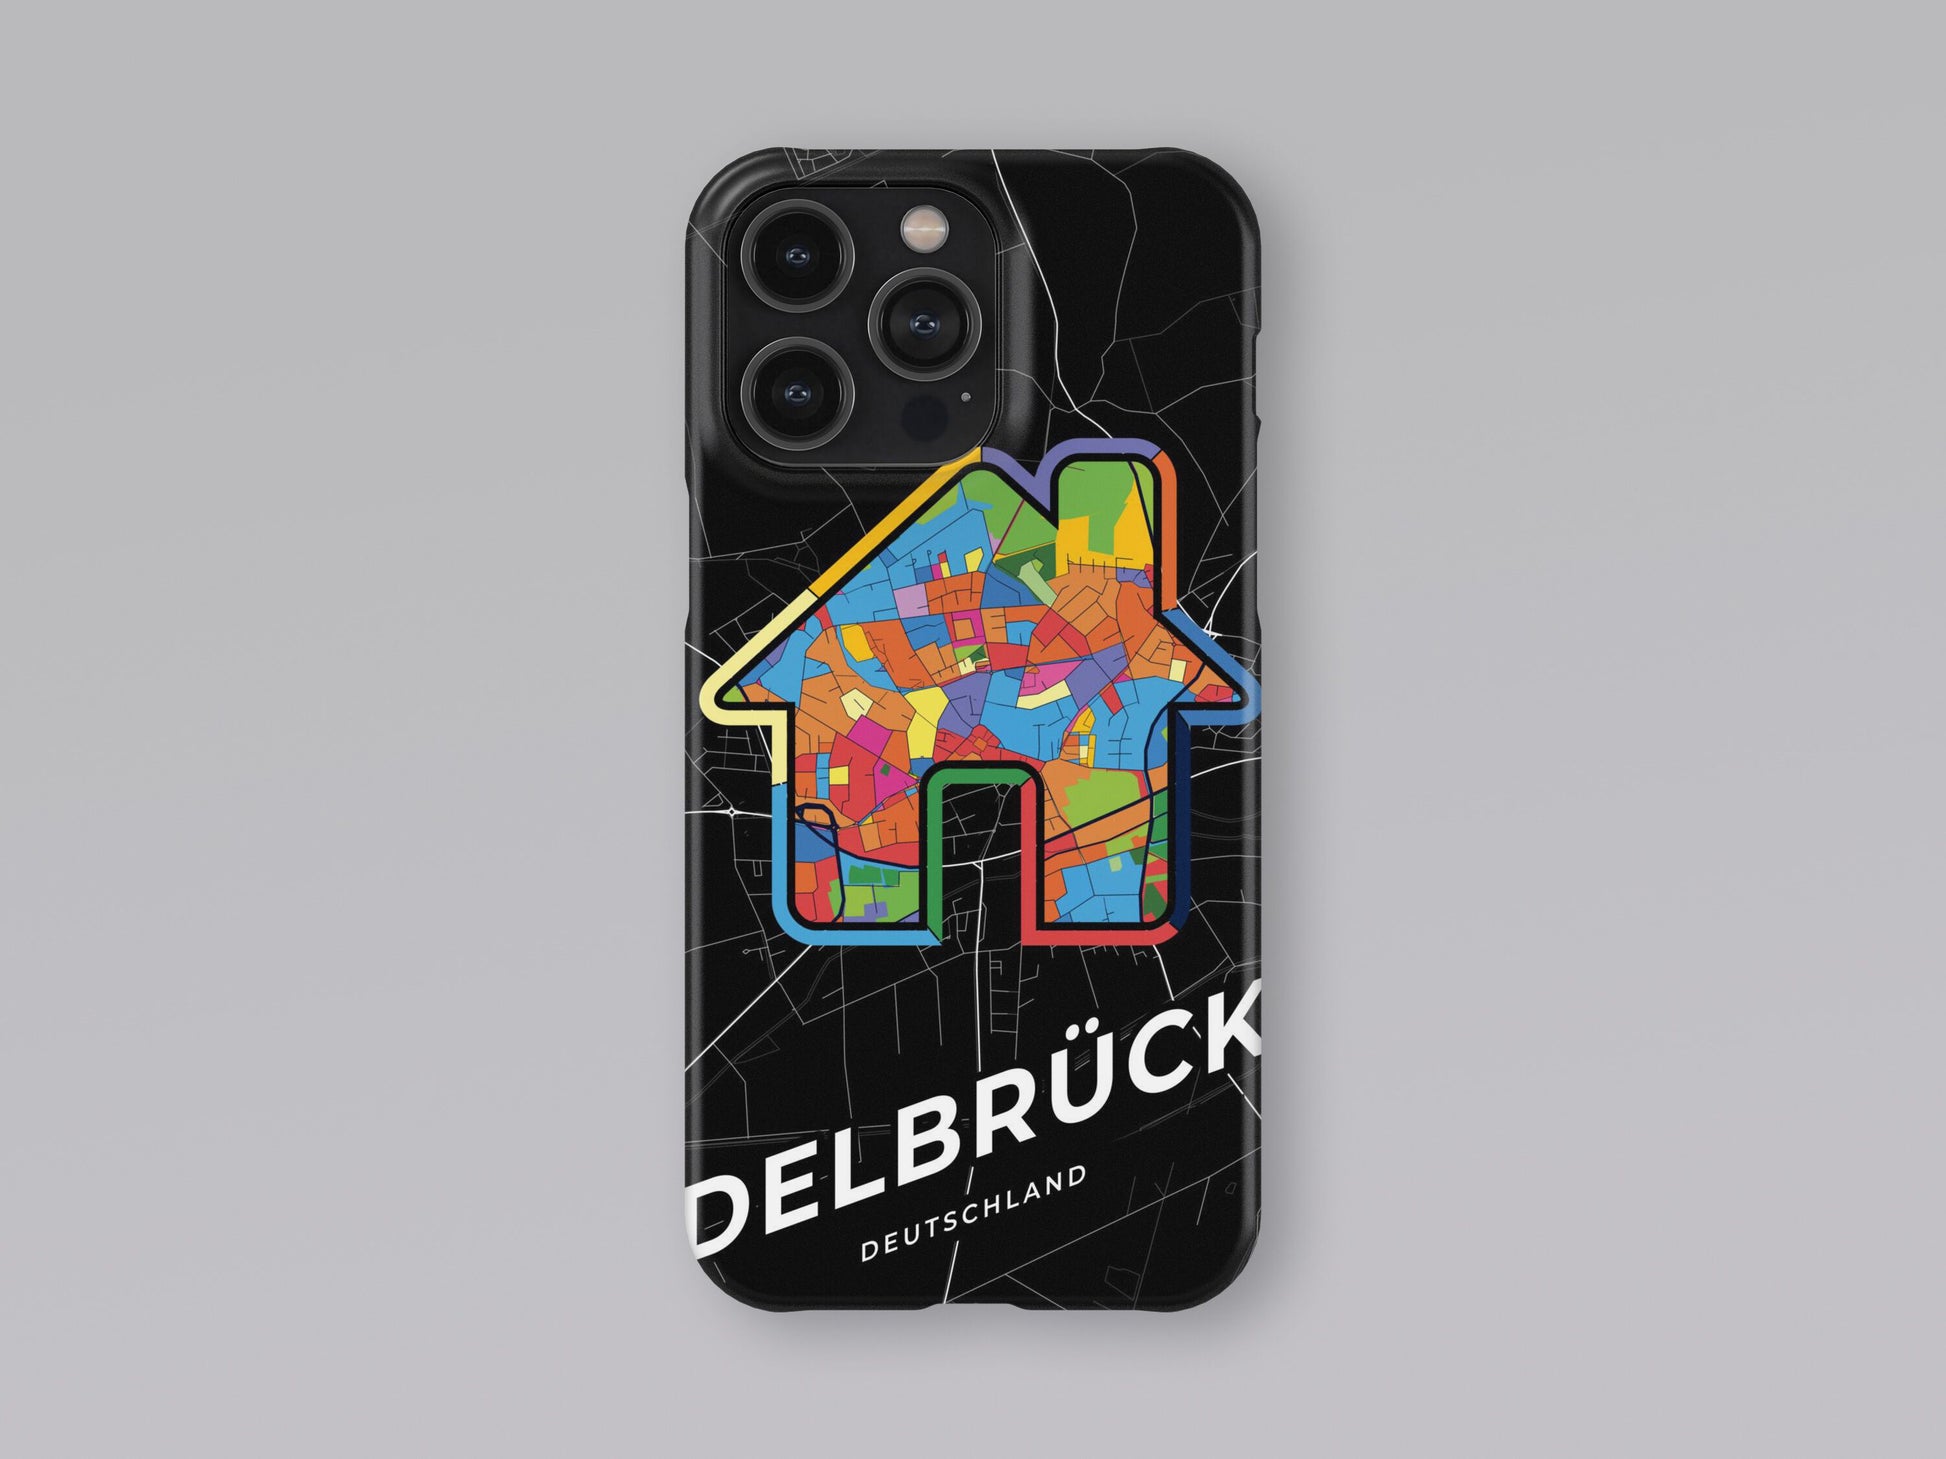 Delbrück Deutschland slim phone case with colorful icon. Birthday, wedding or housewarming gift. Couple match cases. 3